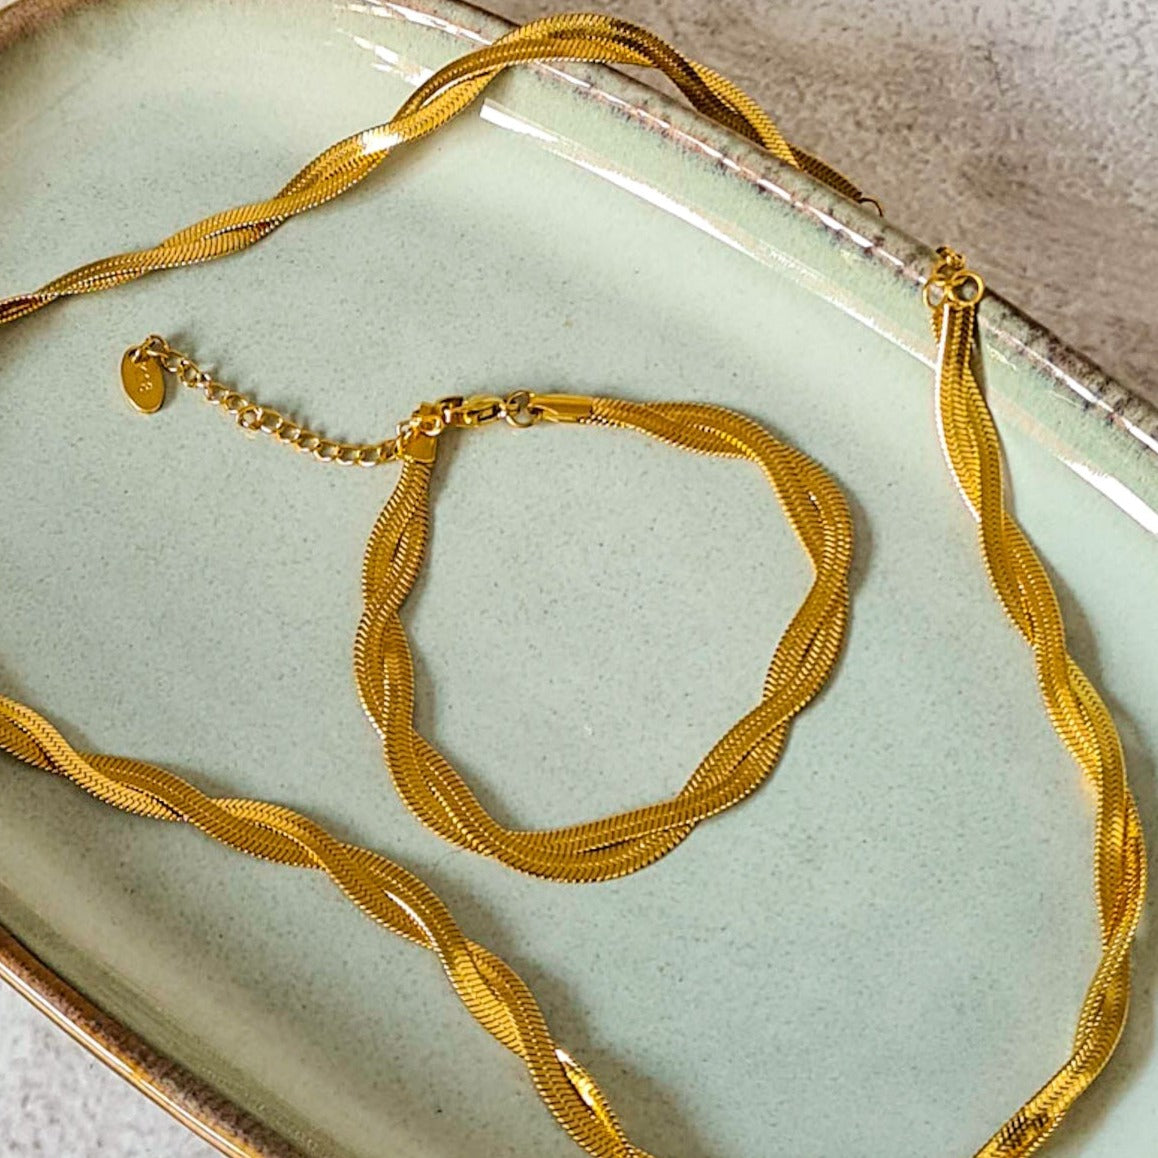 Gold tone double strand twisted flat snake bracelet and necklace set